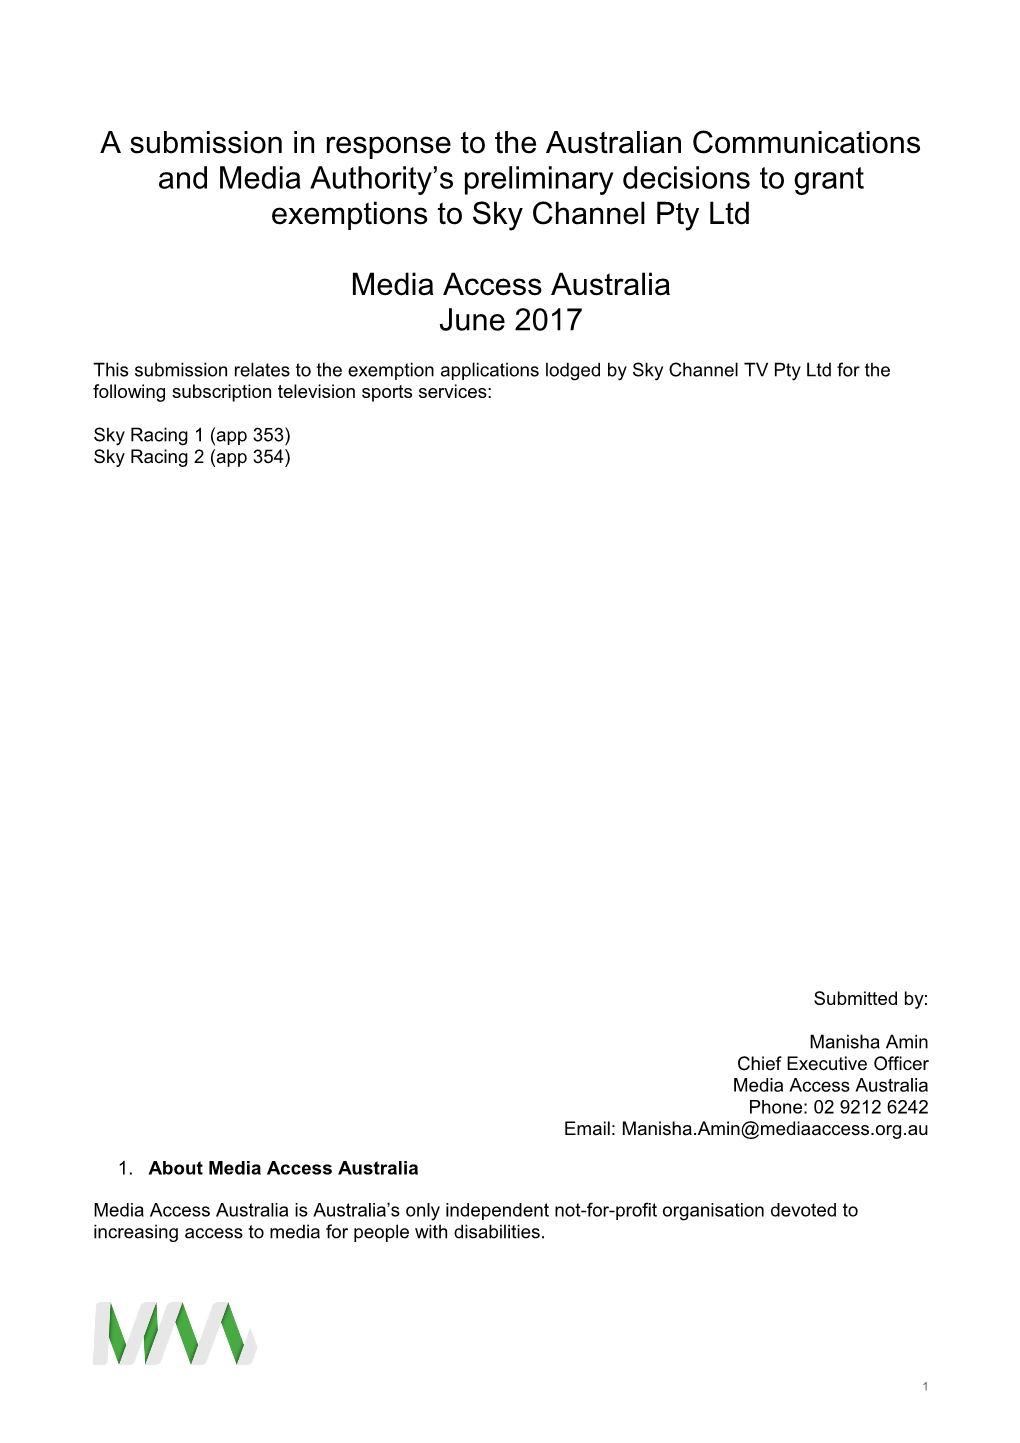 Media Access Australia